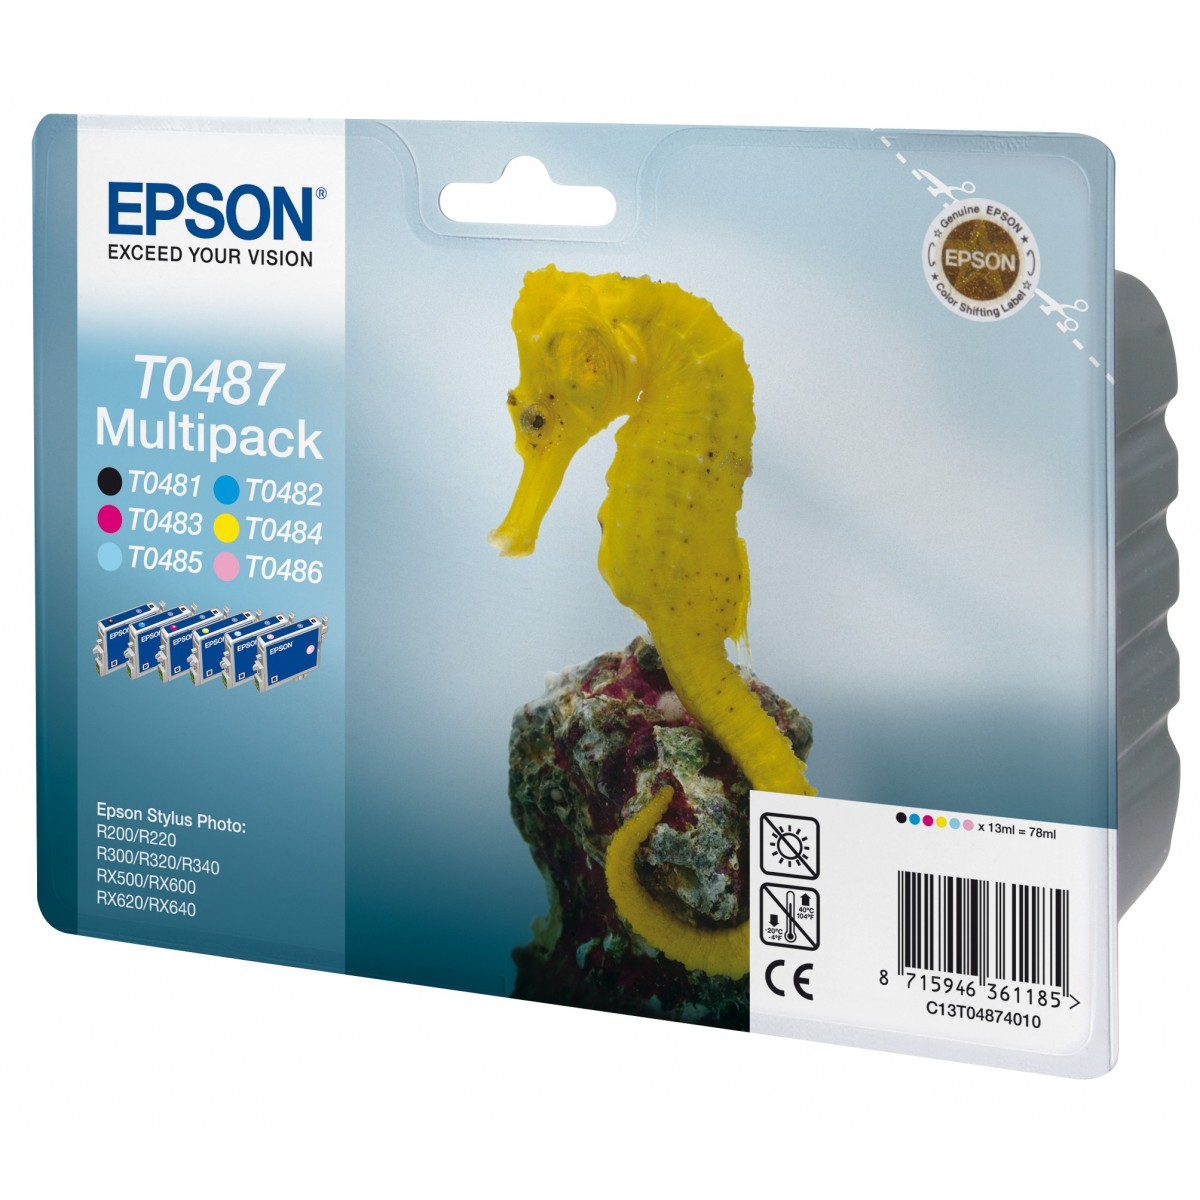 Epson Multipack T0487 - Ink Cartridge Original - Black, cyan, magenta, Light / Photo cyan, Light / Photo Magenta, Yellow - 78 ml